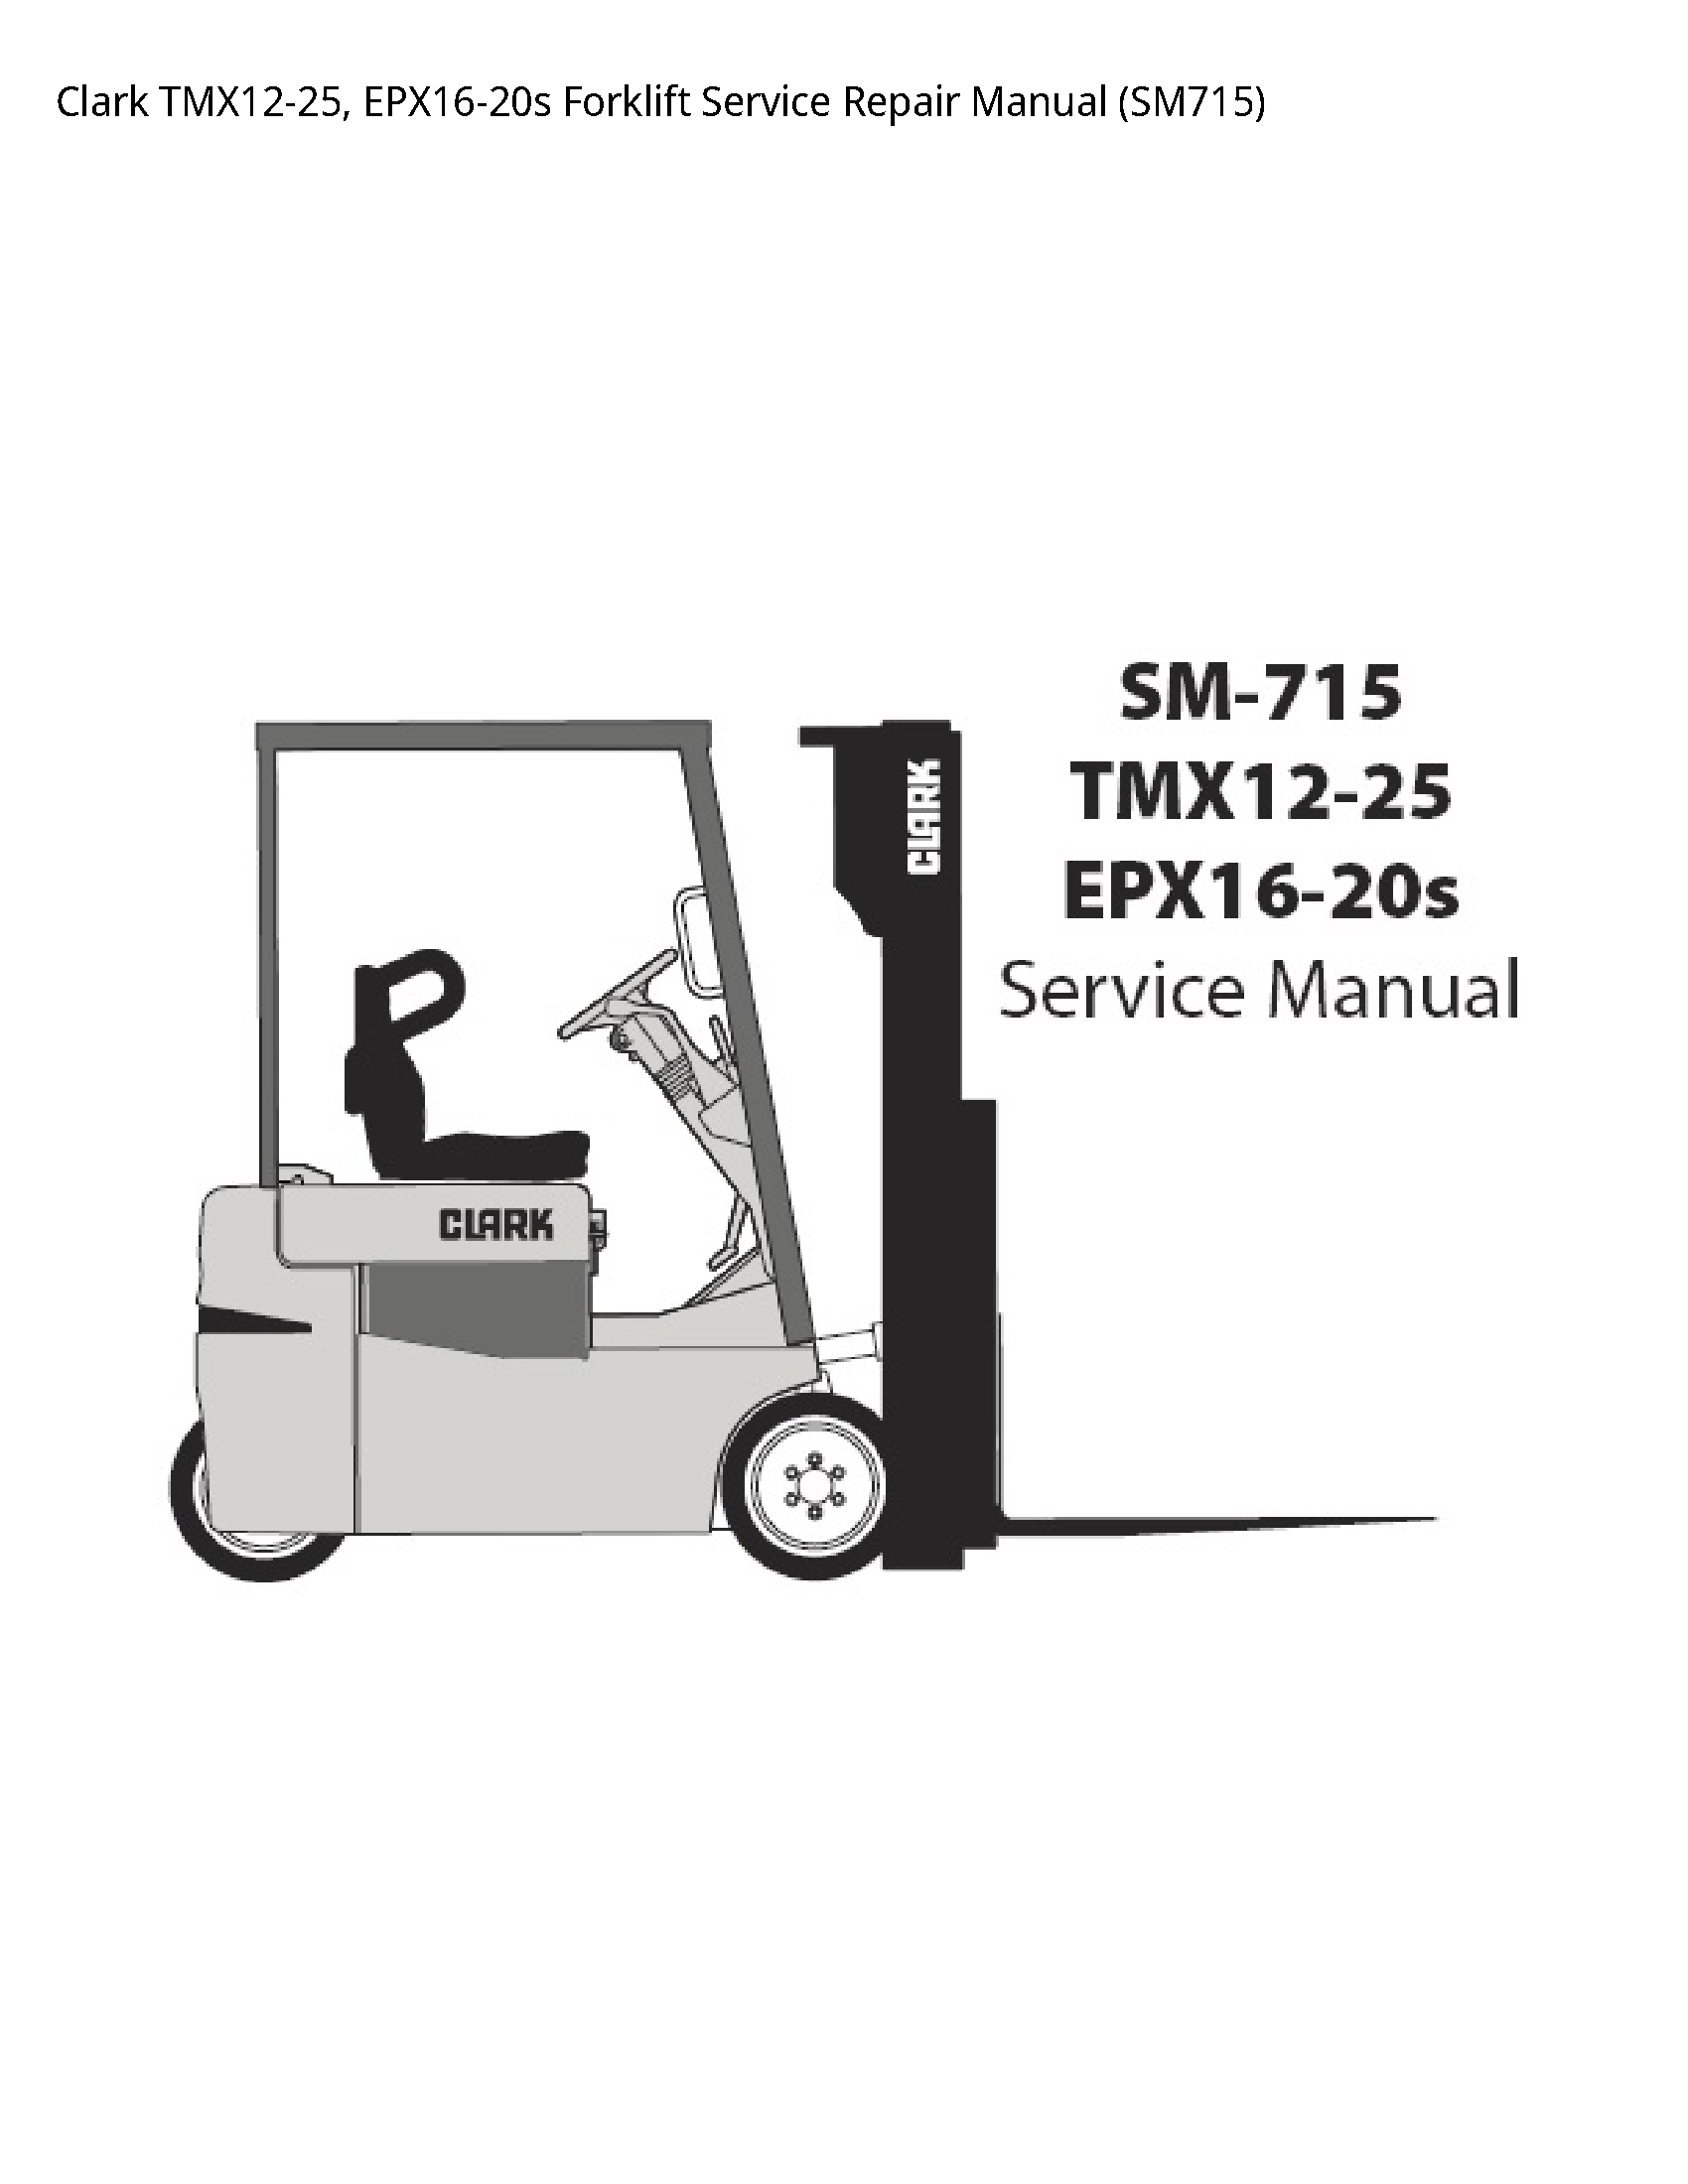 Clark TMX12-25 Forklift manual